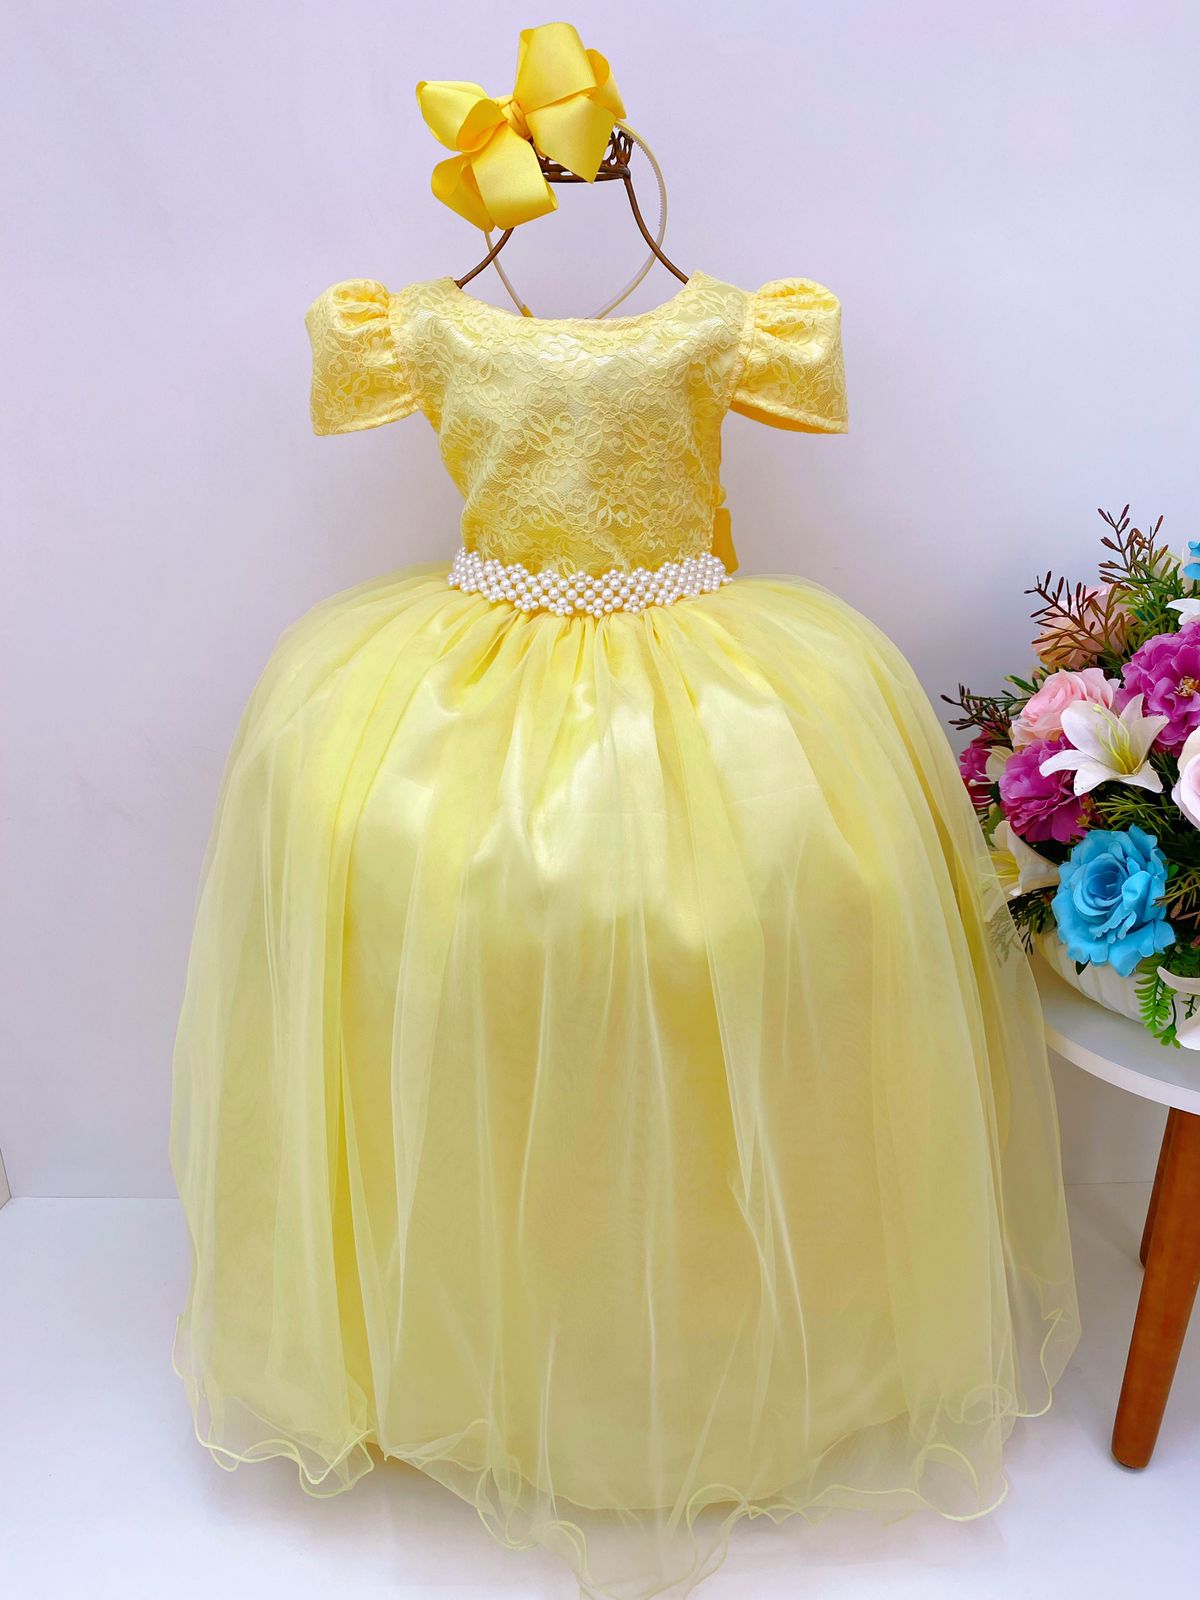 Vestido Infantil Amarelo Tule Longo C/ Renda Damas Luxo